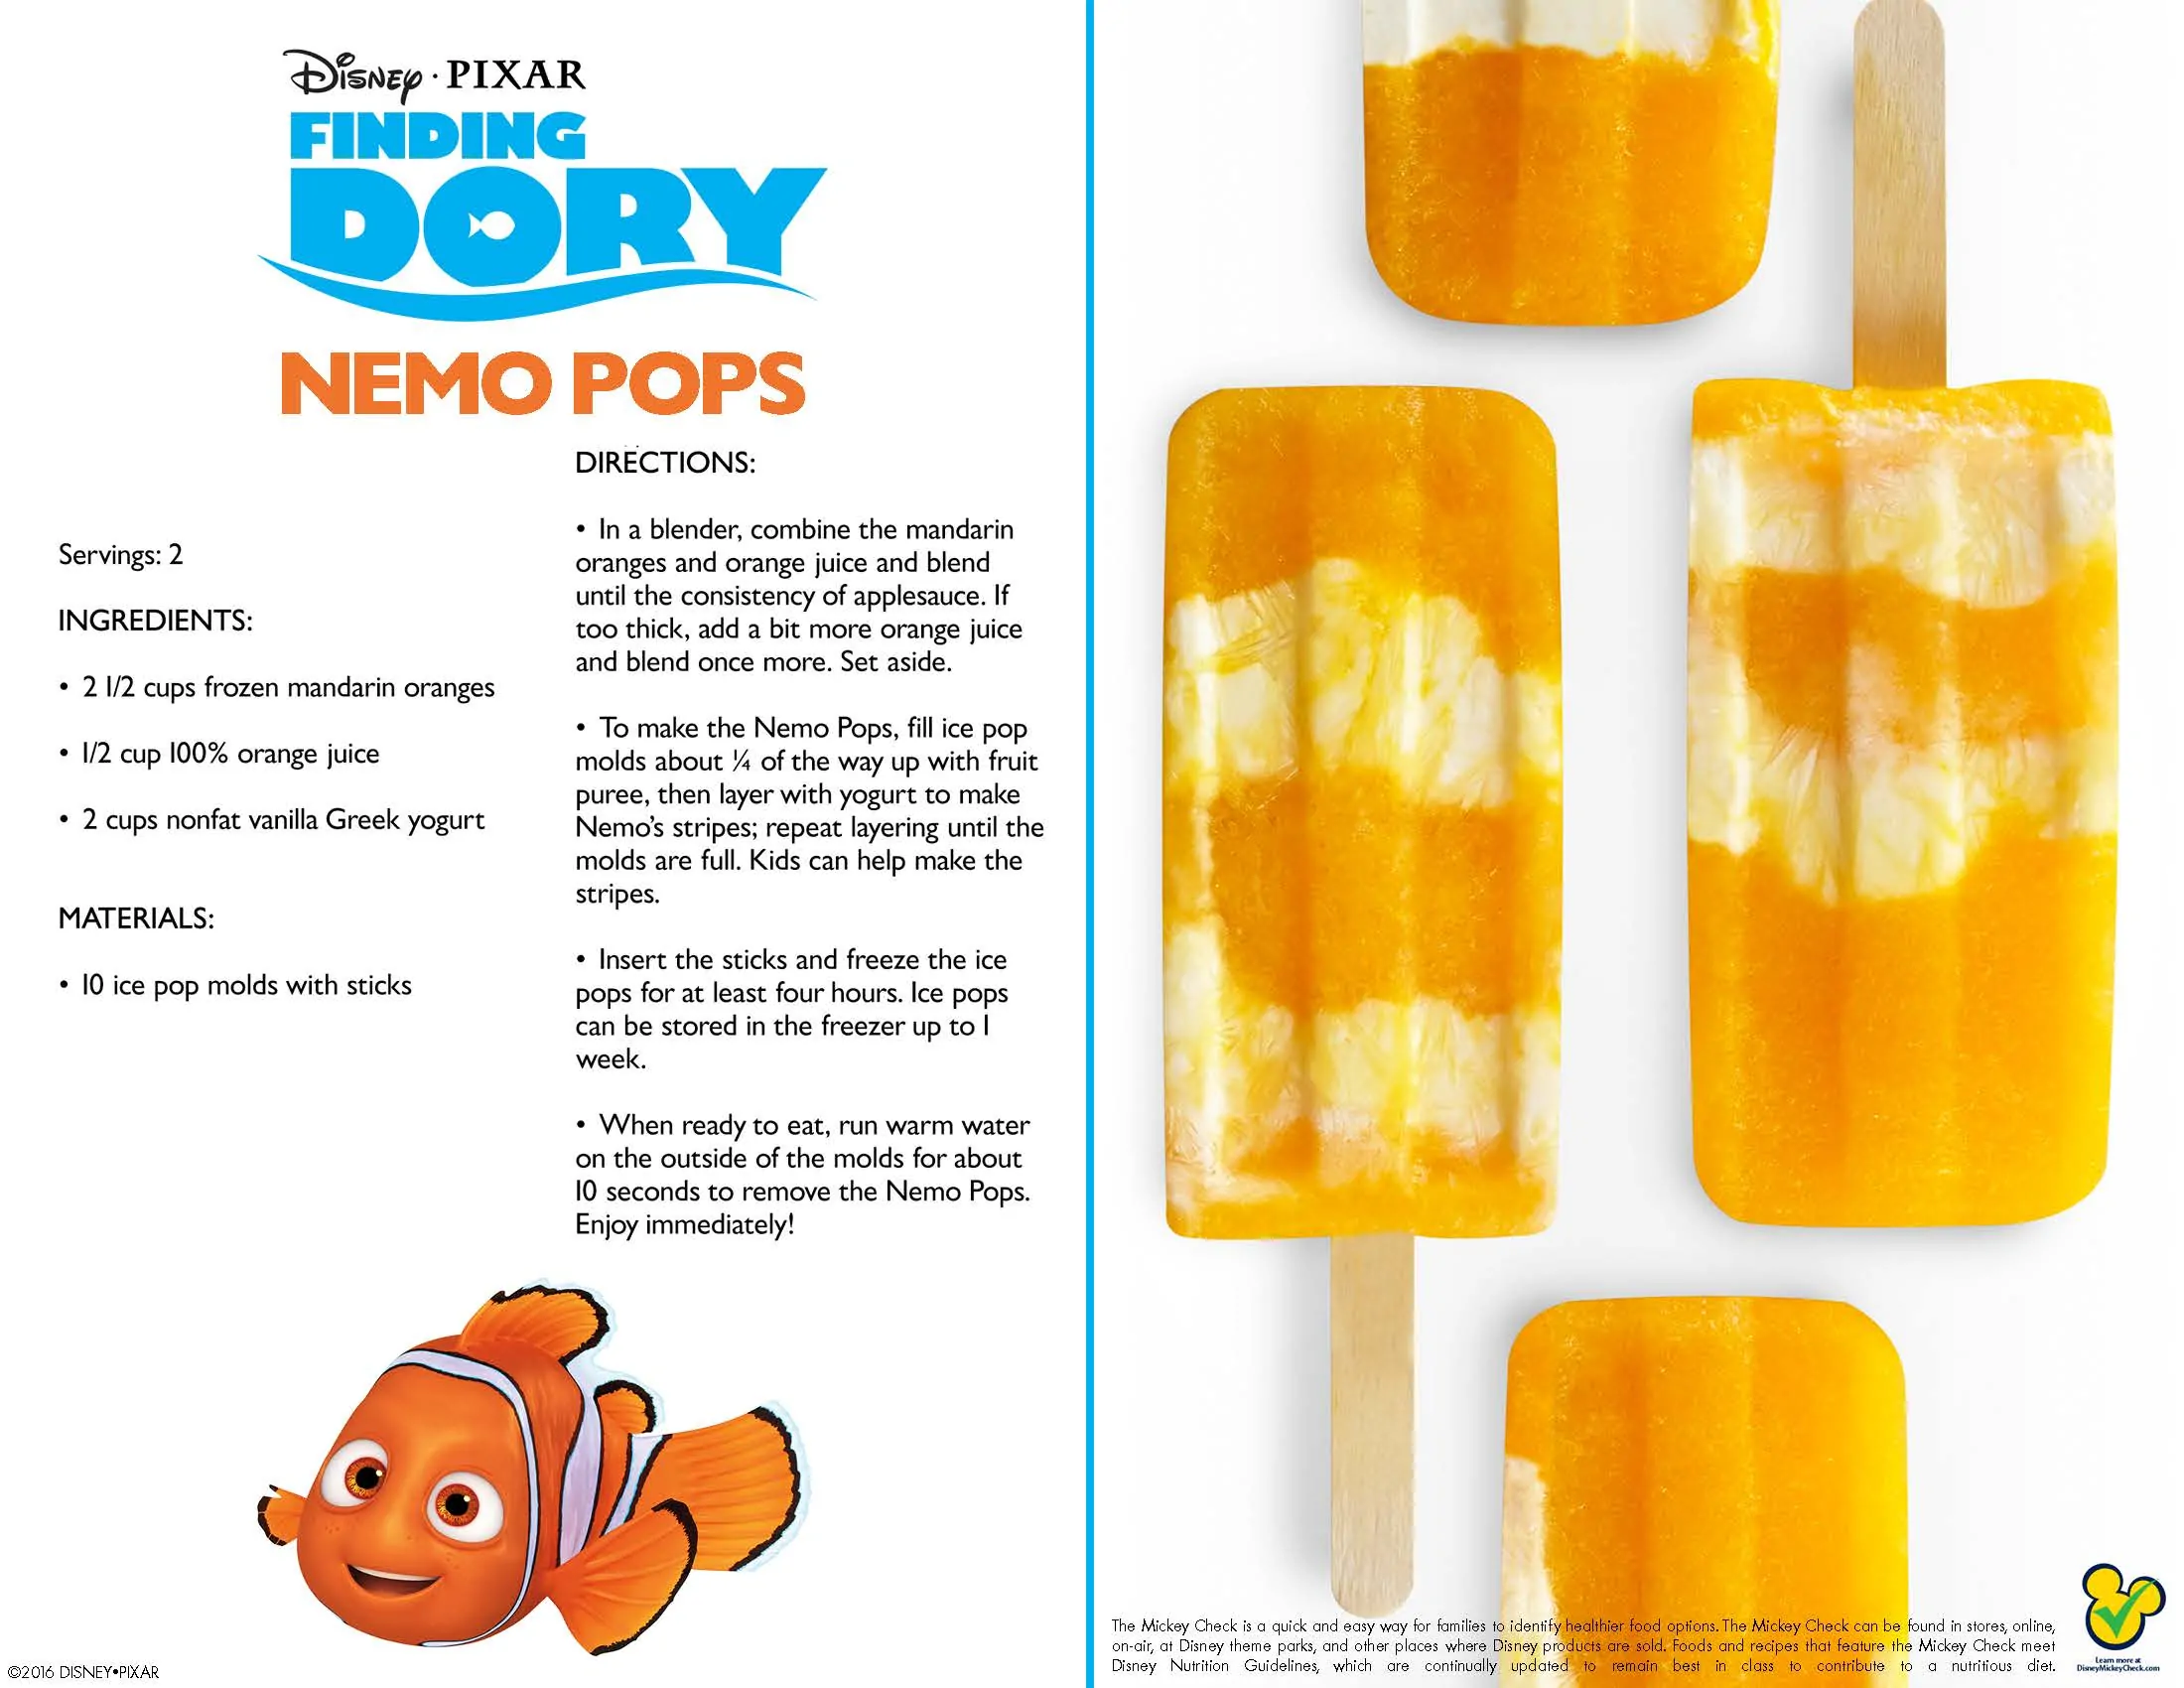 Nemo Pops